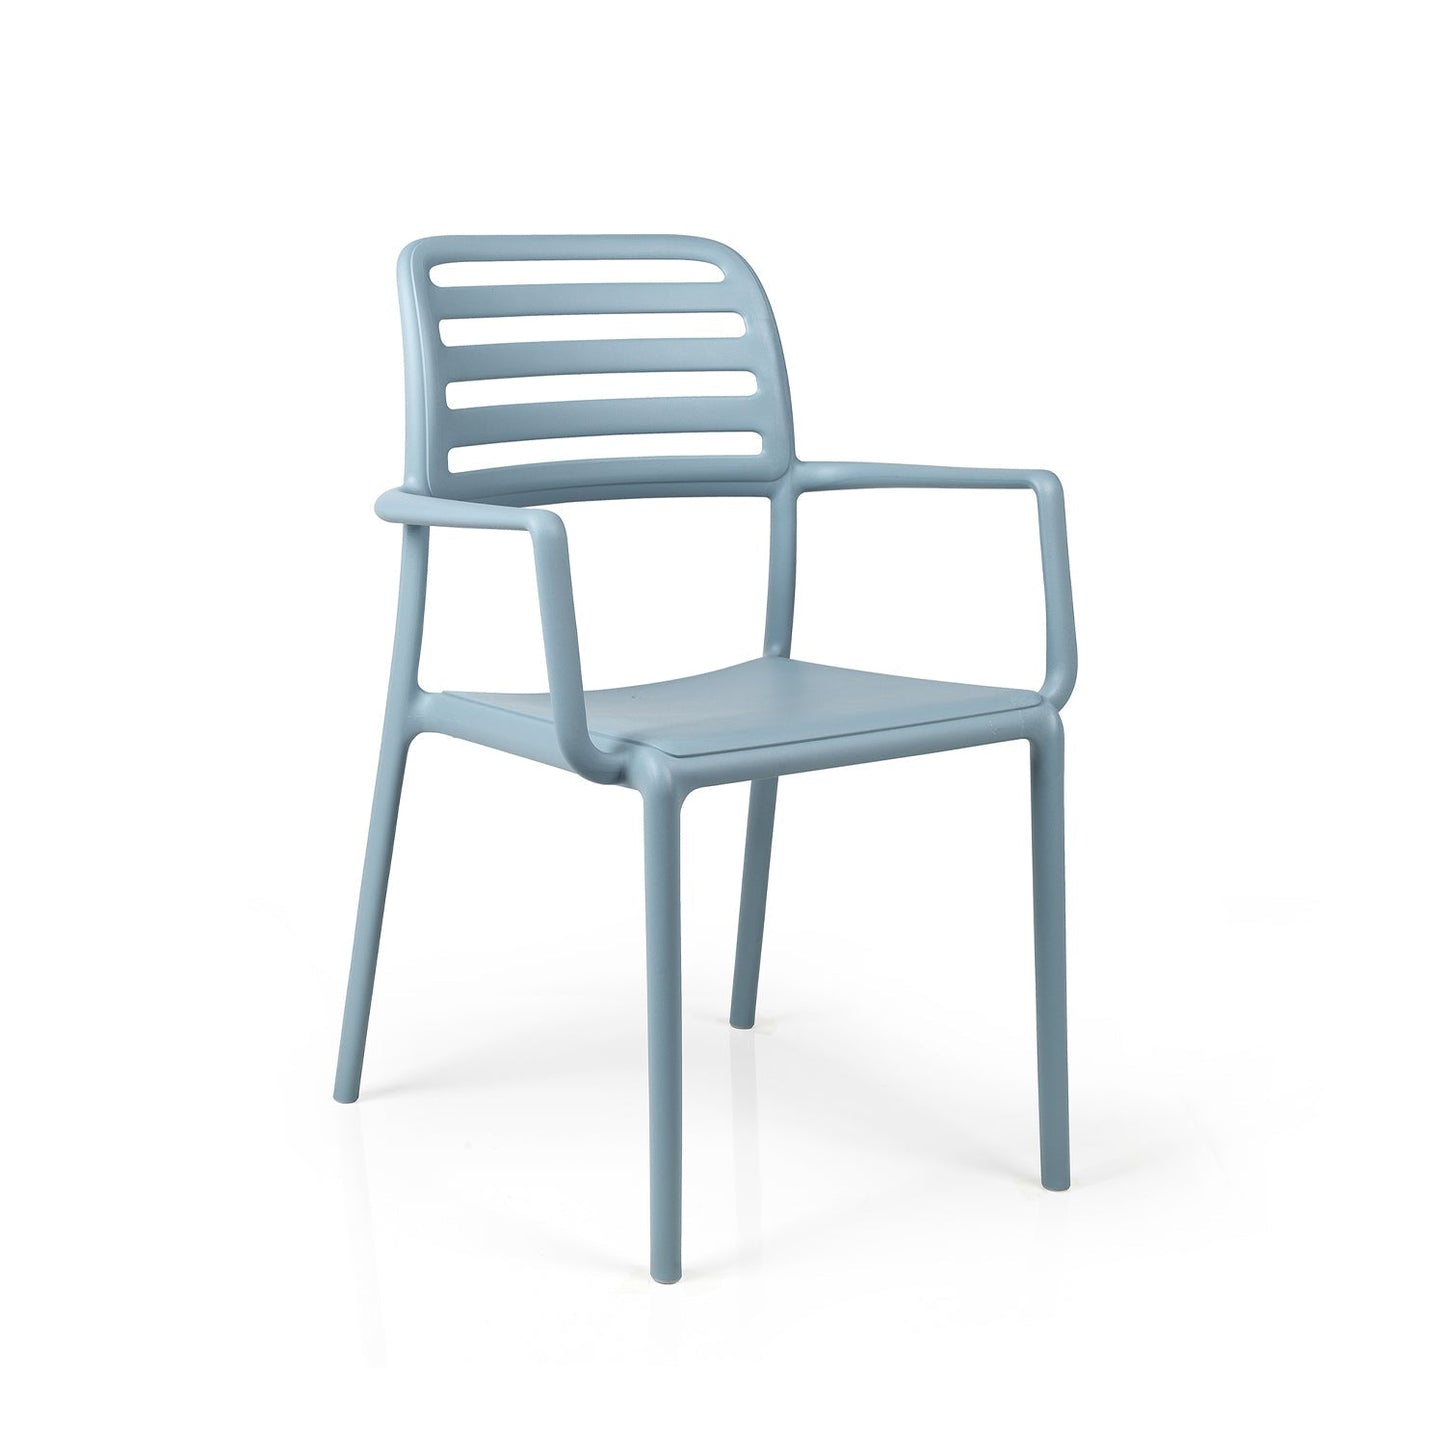 Costa Garden Chair By Nardi - Powder Blue